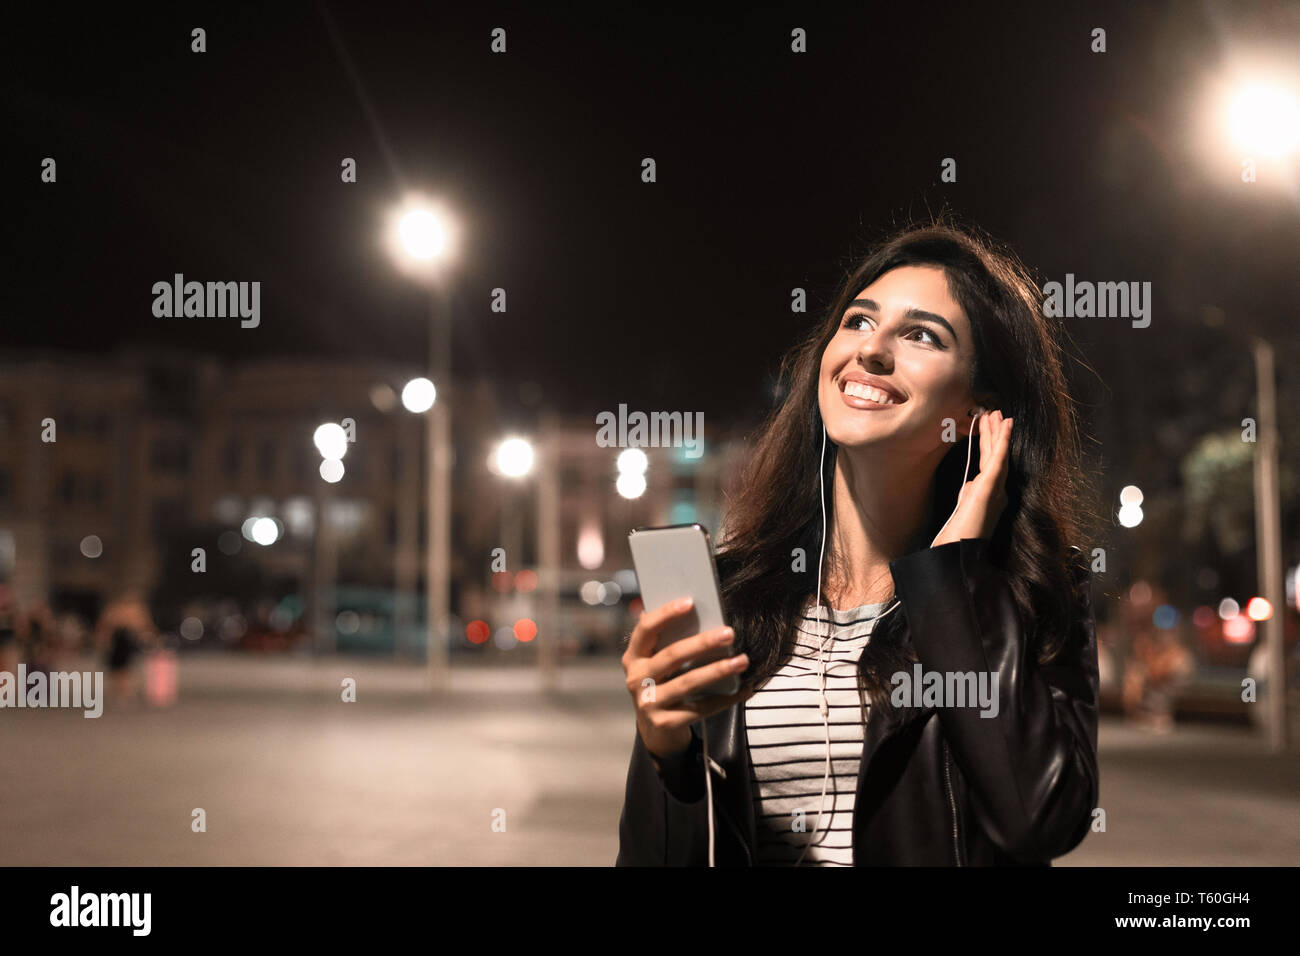 Enjoying walk at night. Girl listening music in earphones in the city Stock Photo